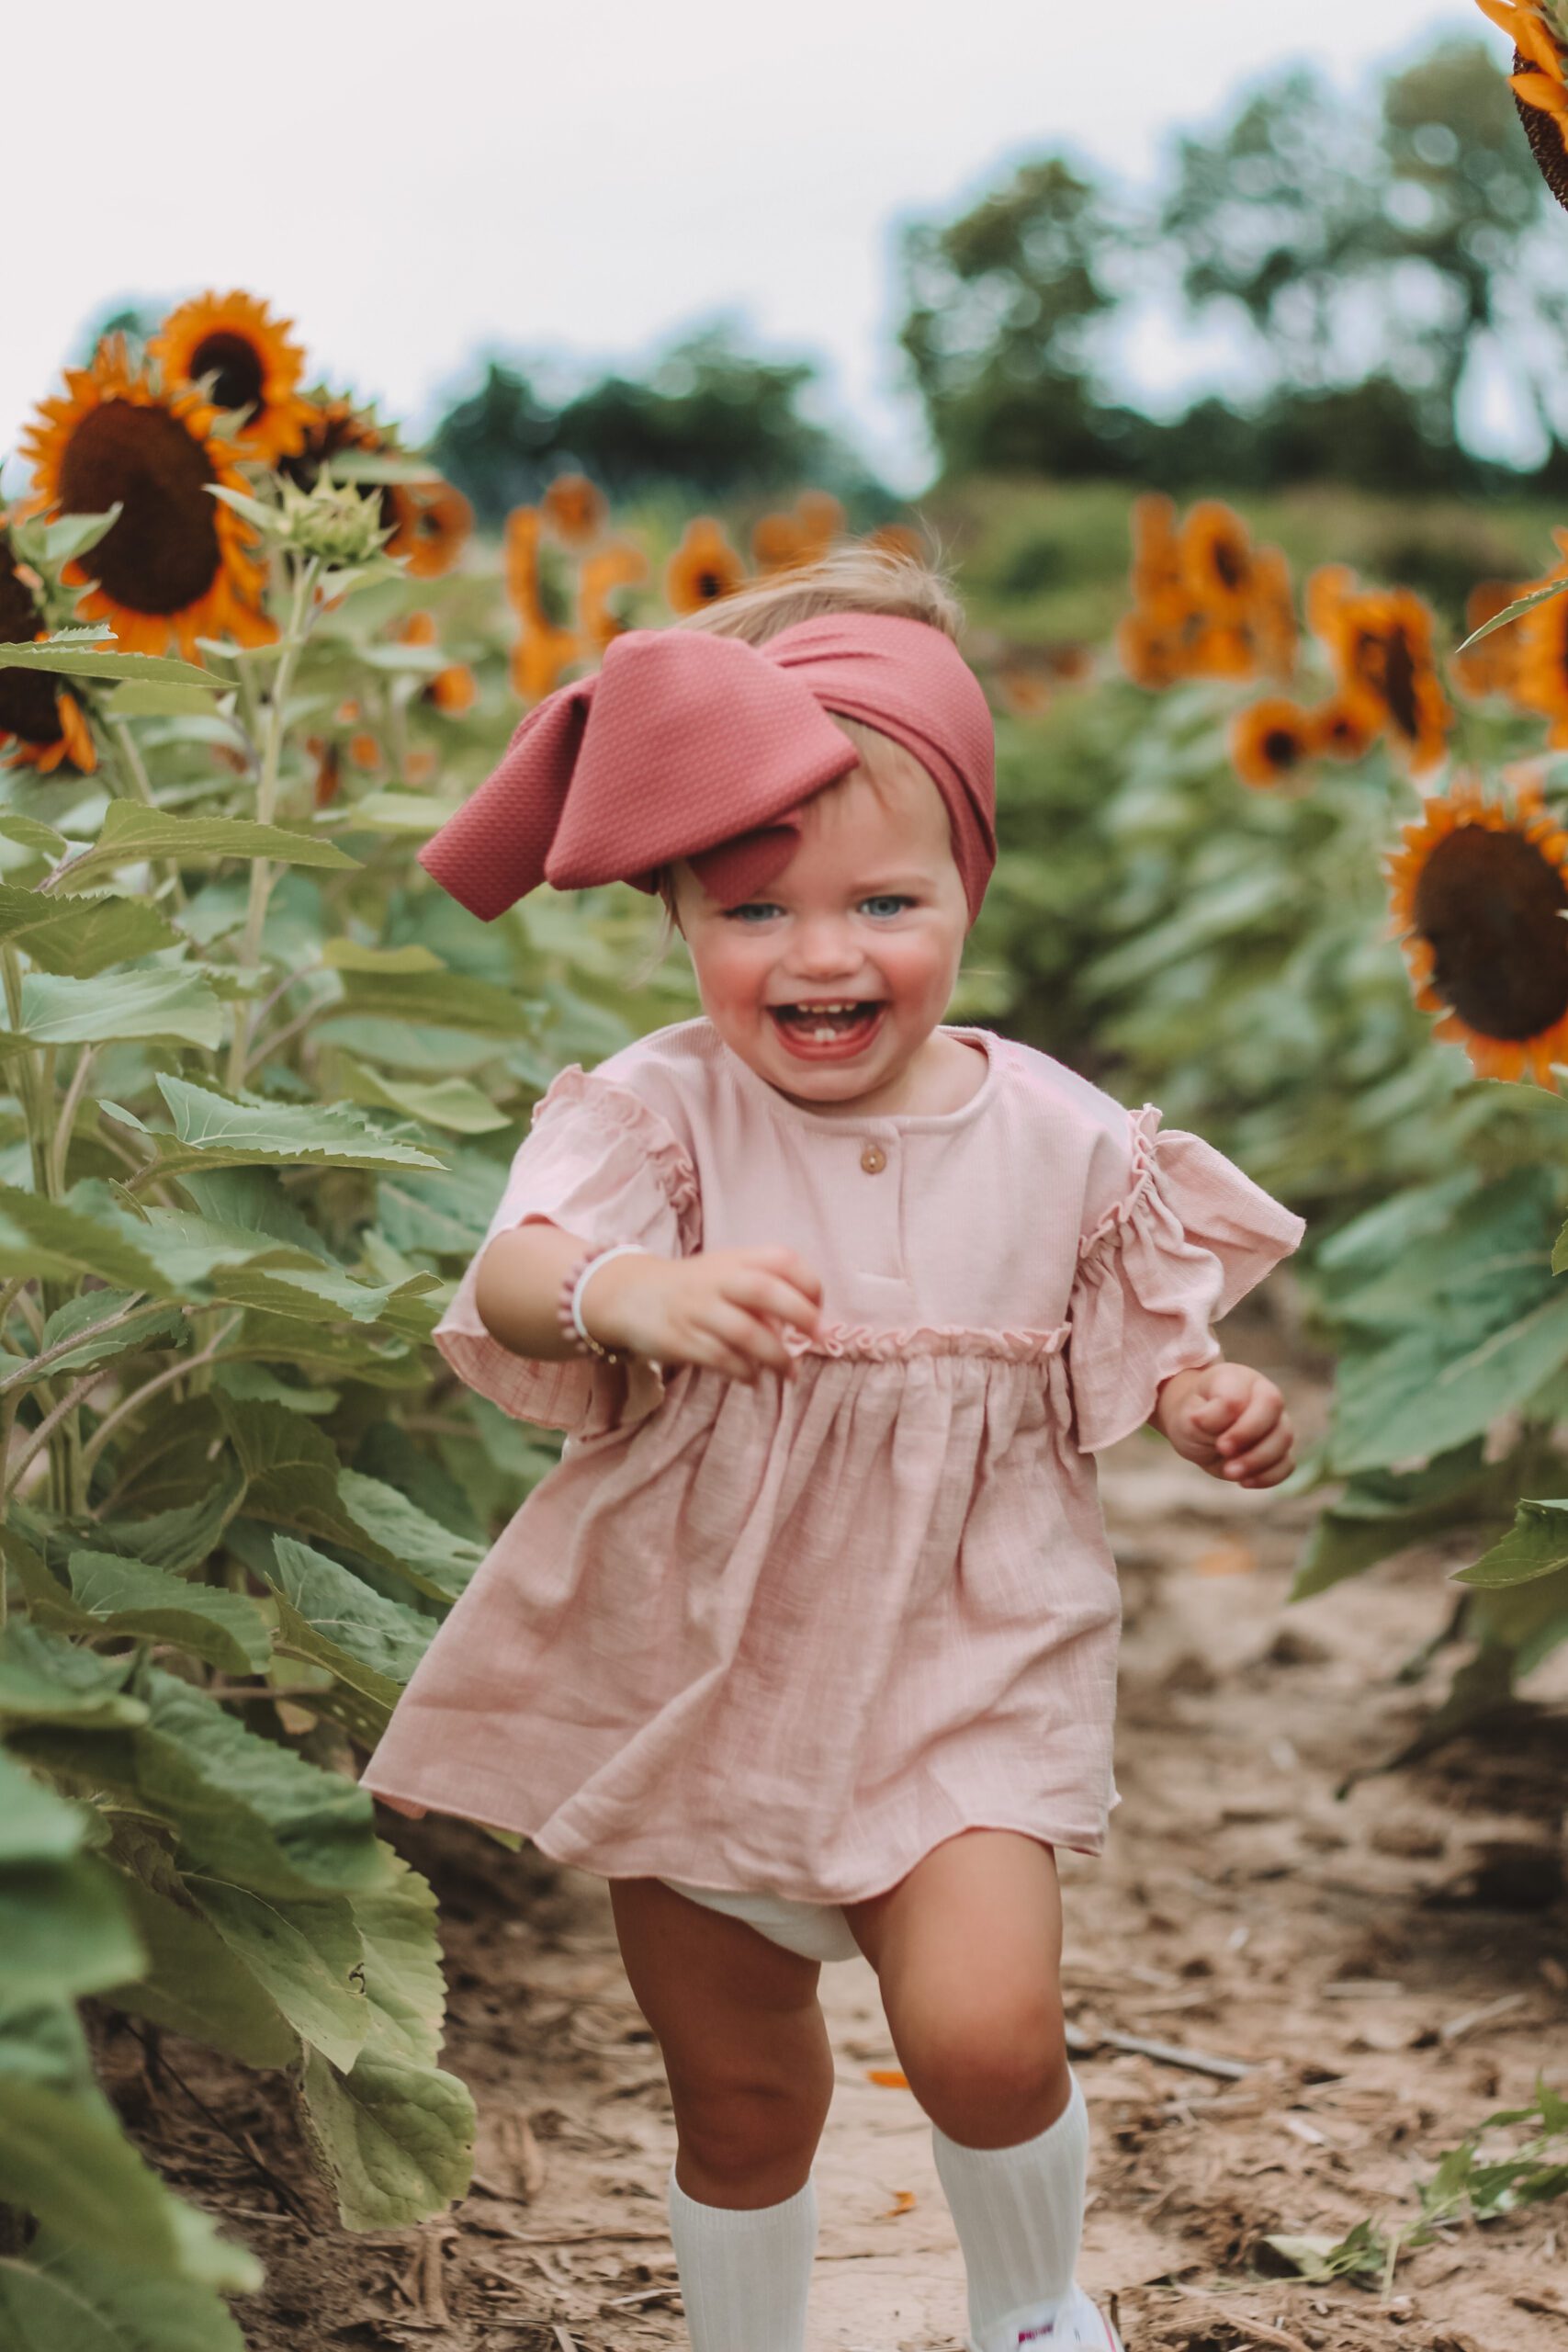 A joyous toddler in a pink dress and hat runs through a sunflower field.